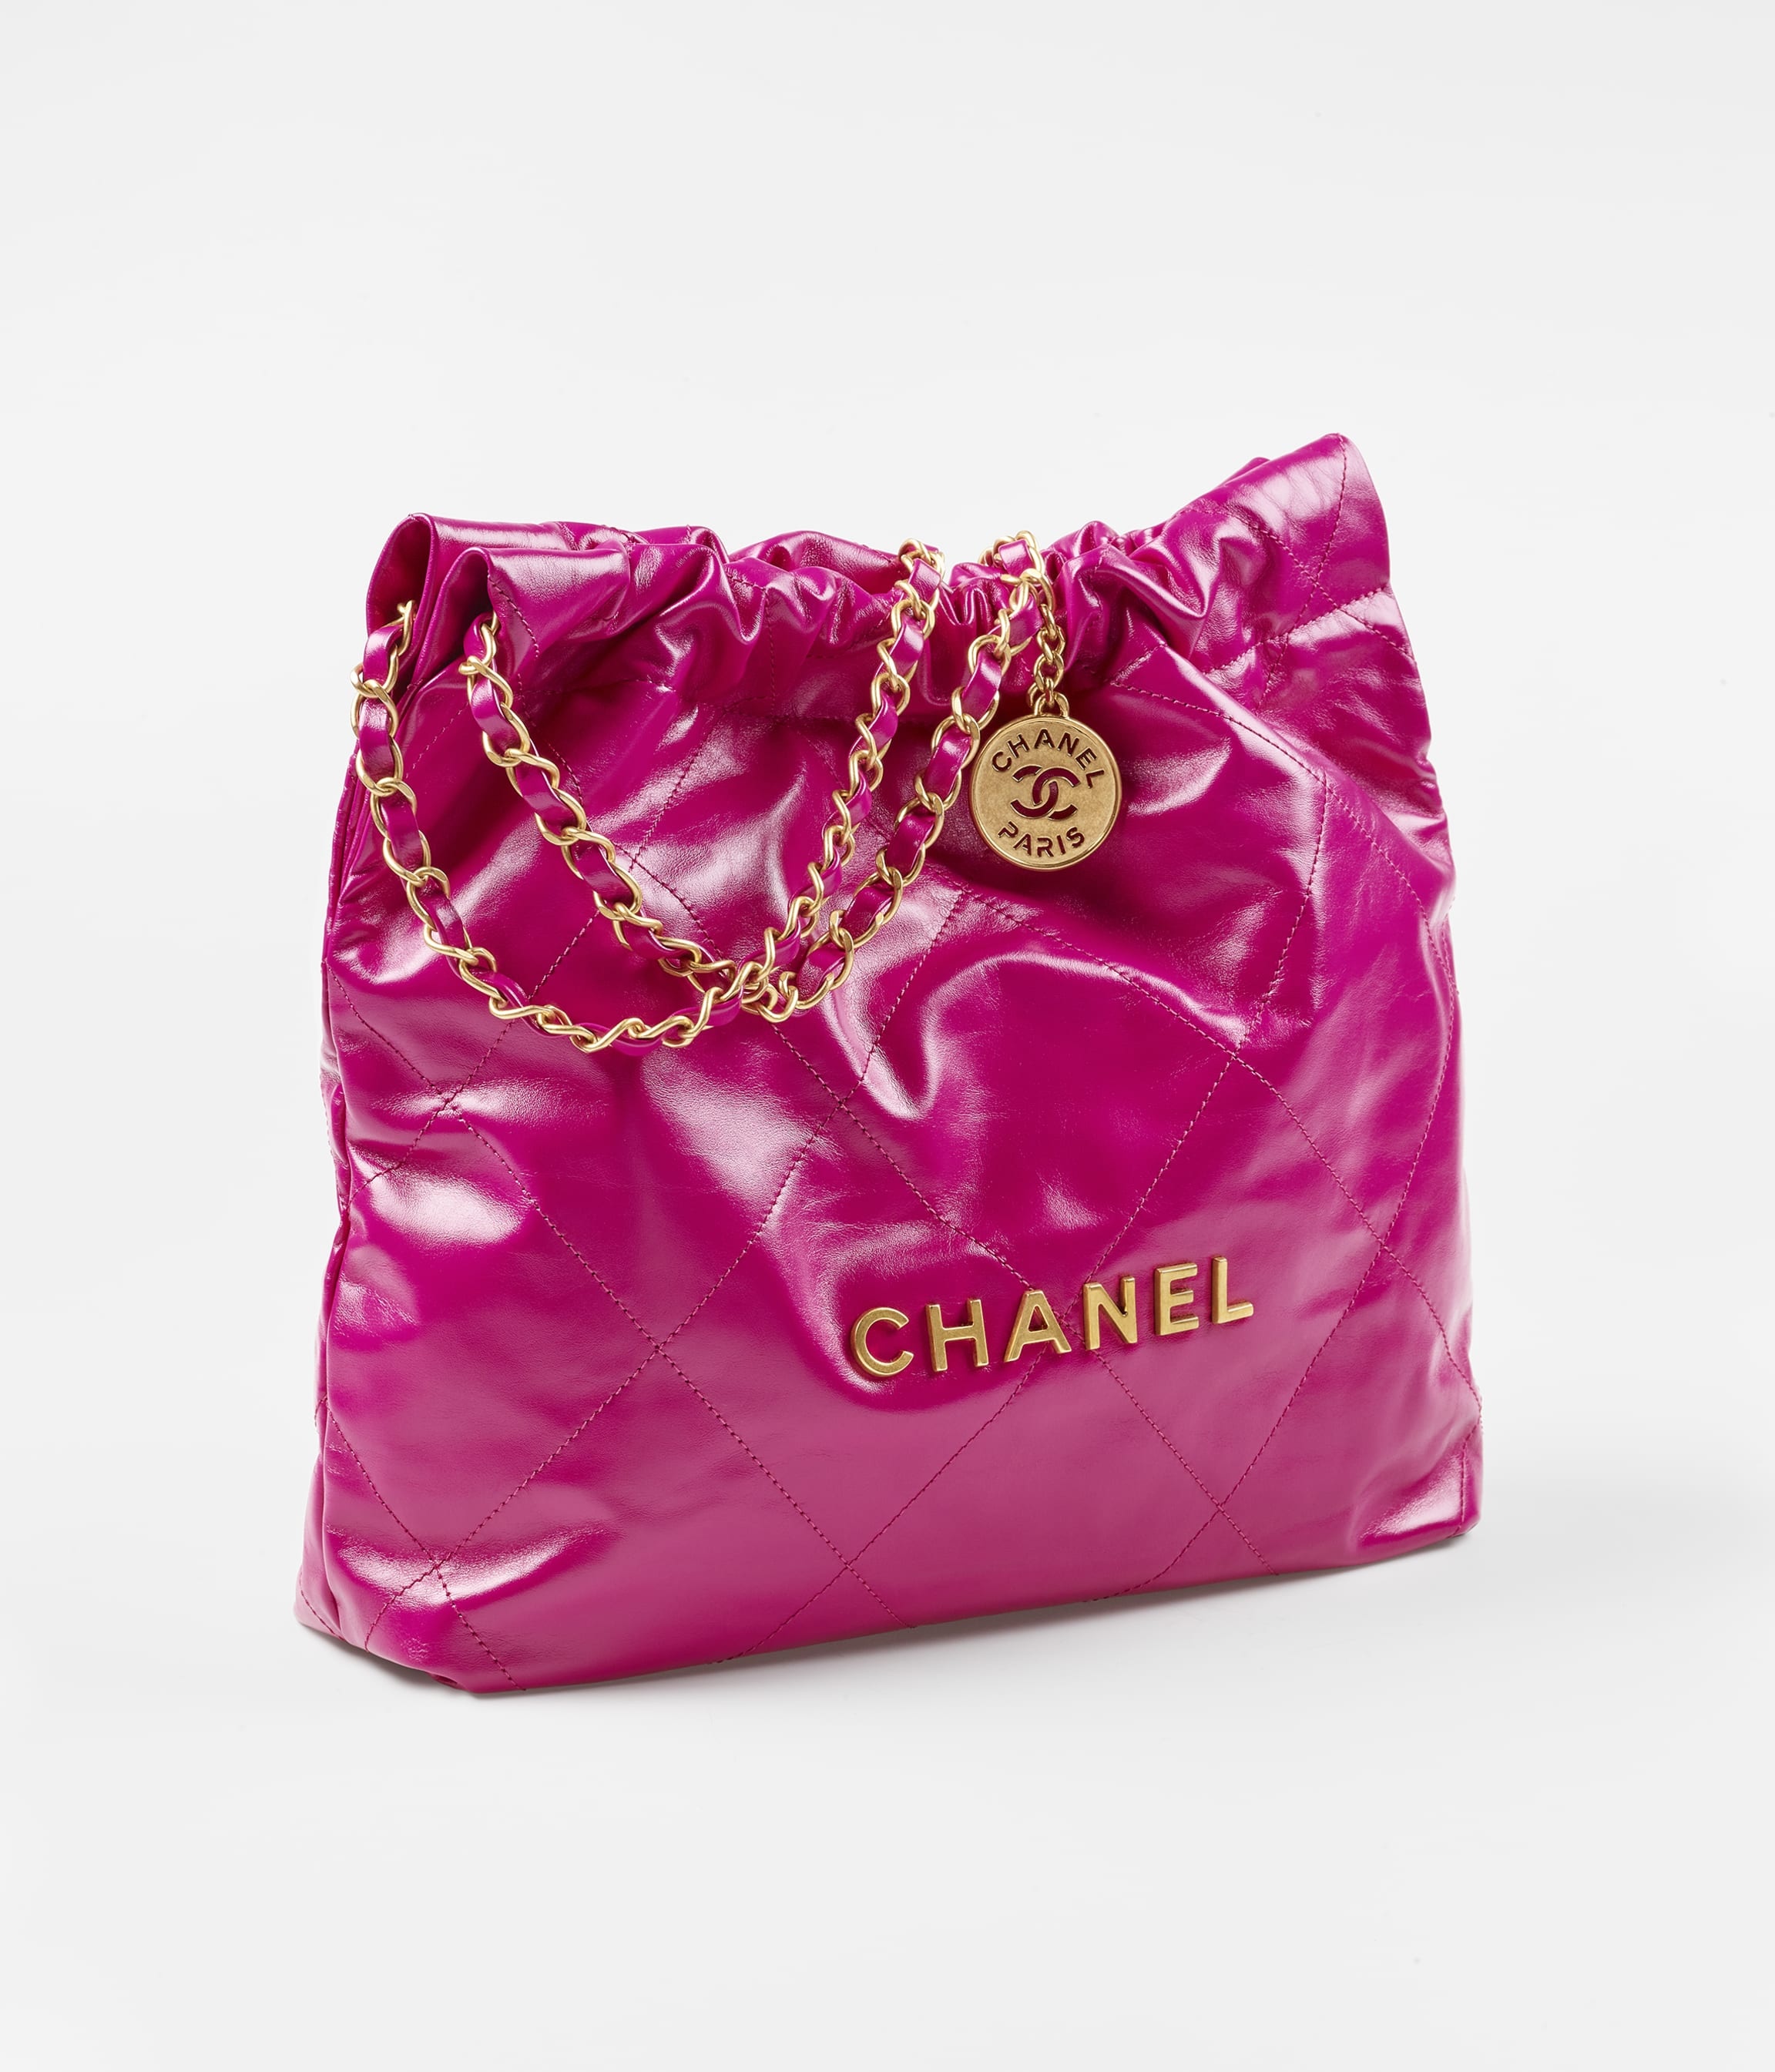 CHANEL 22 Small Handbag - 2